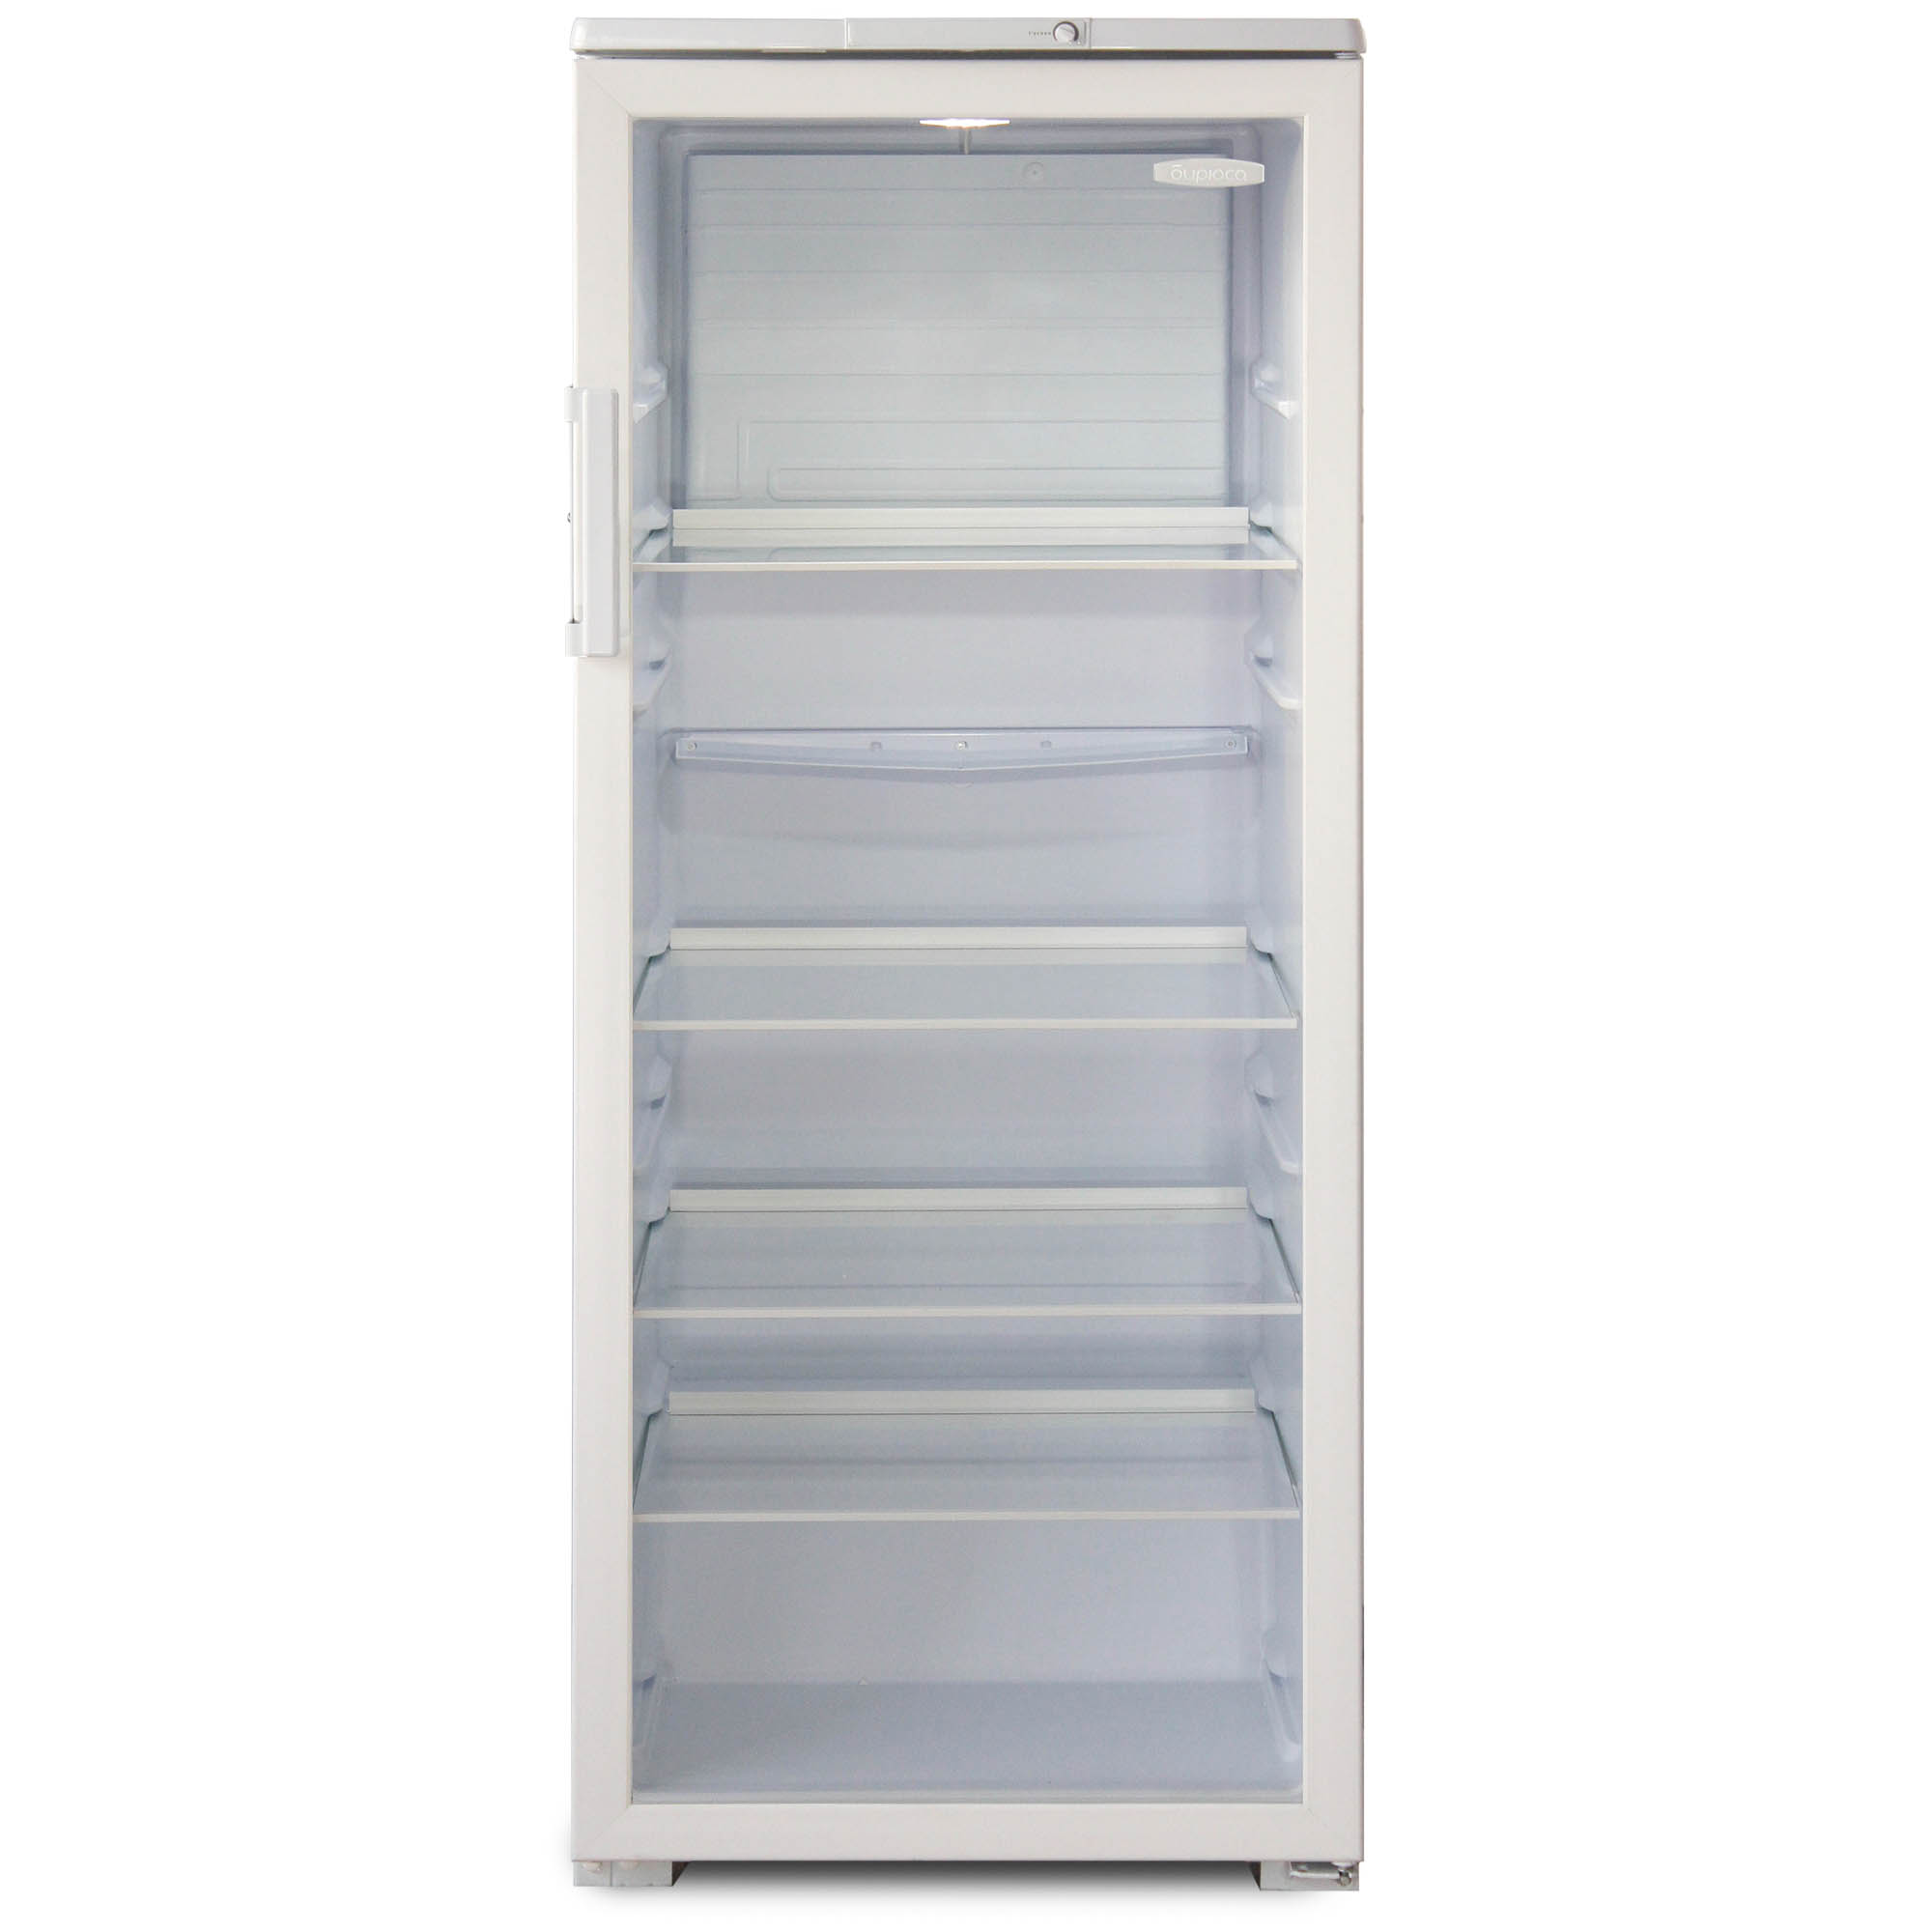 Холодильный шкаф Бирюса 290 белый